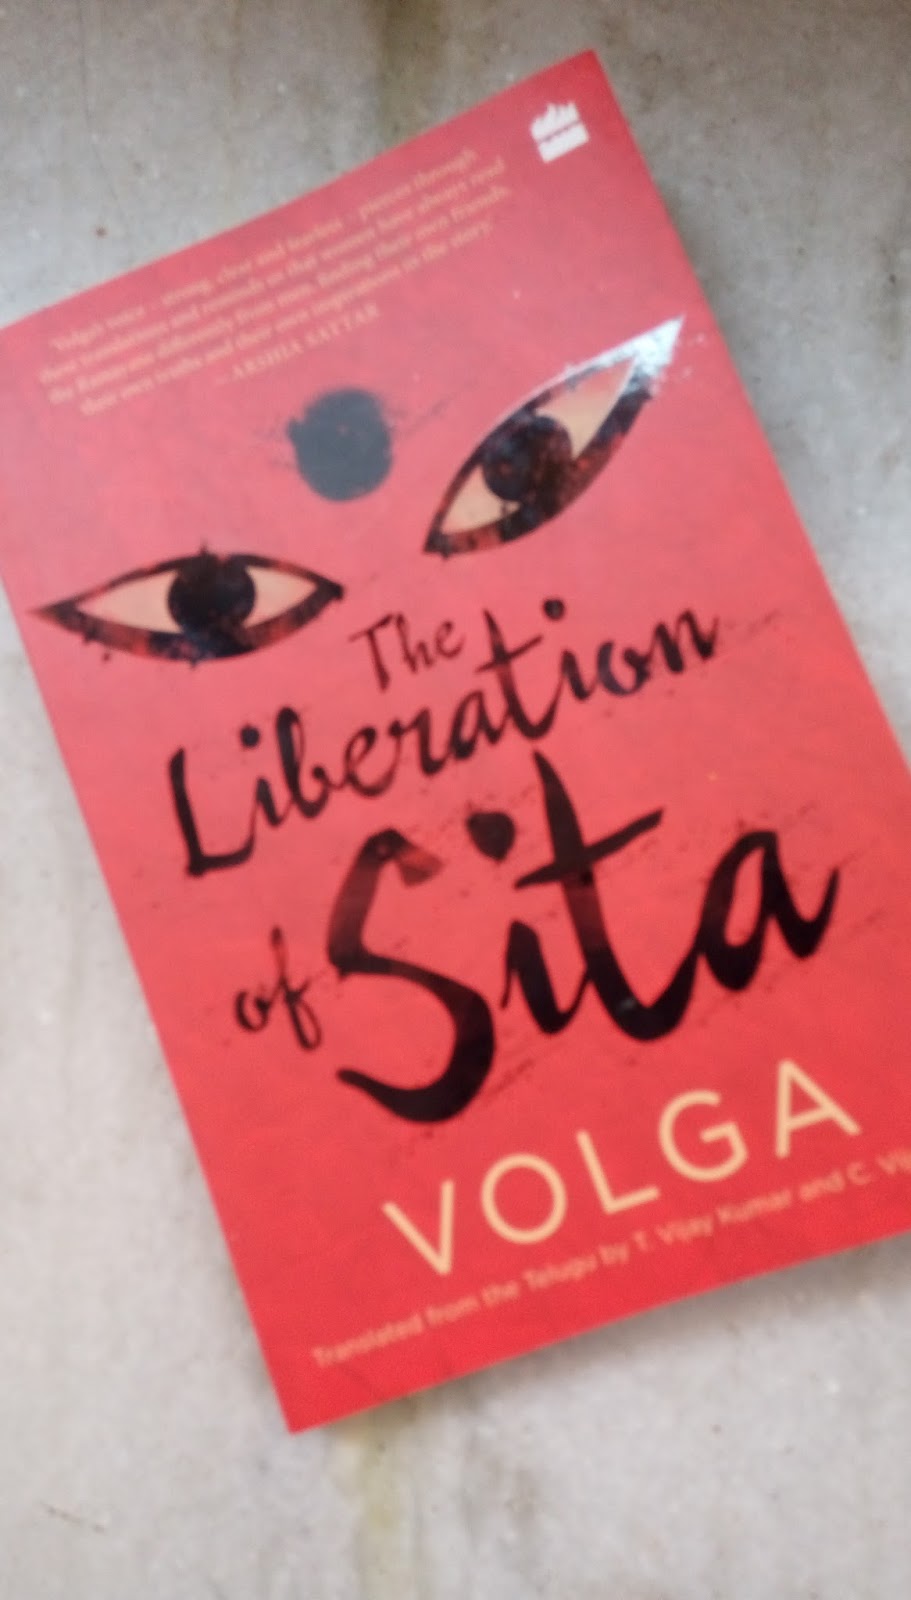 Book Review: Volga's 'The Liberation of Sita